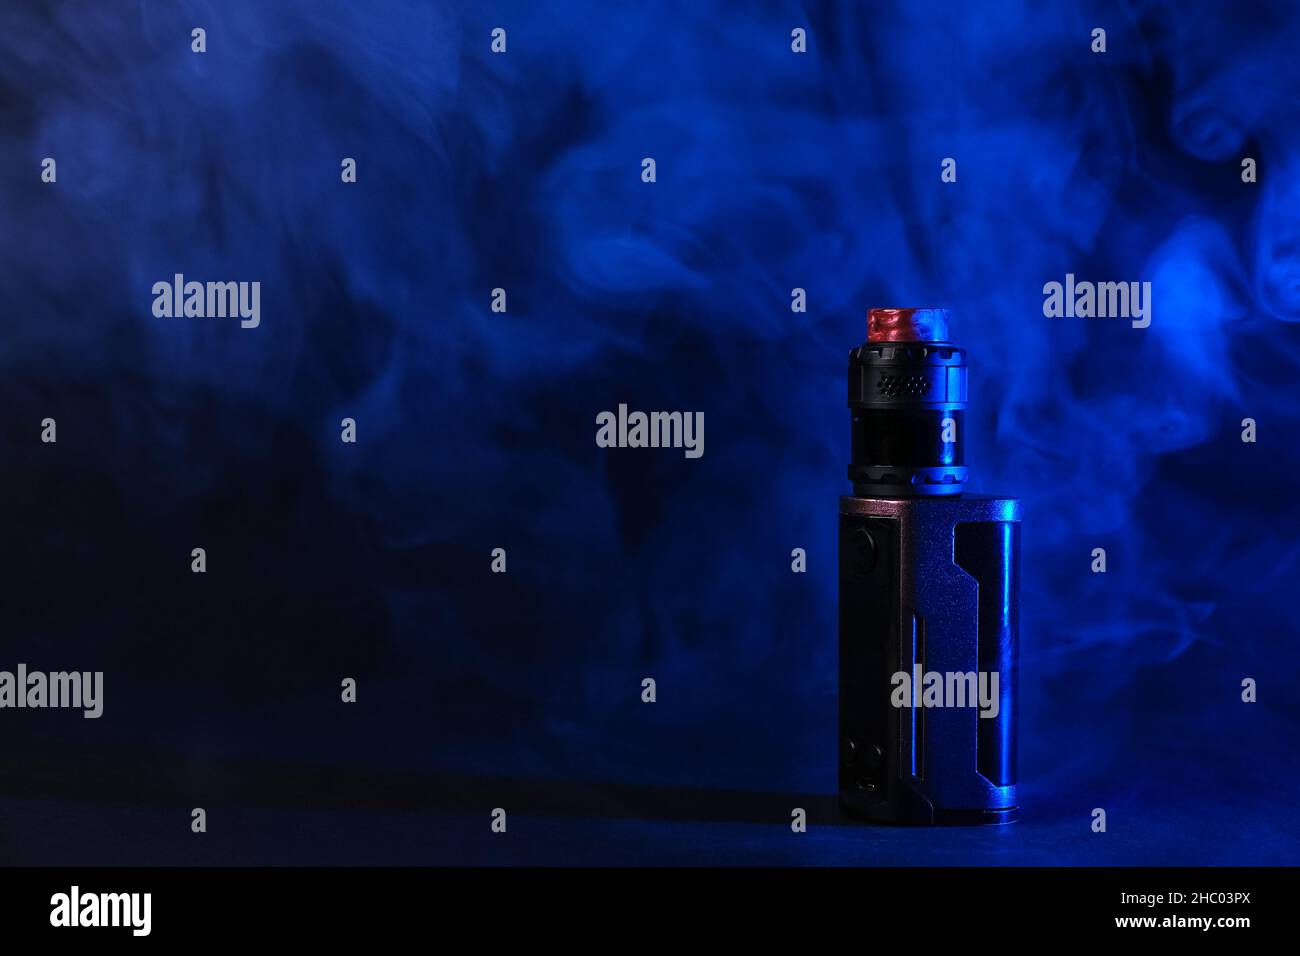 Electronic vaping device mod, atomizer stands in vape smoke and vapor illuminated by blue light. Stock Photo